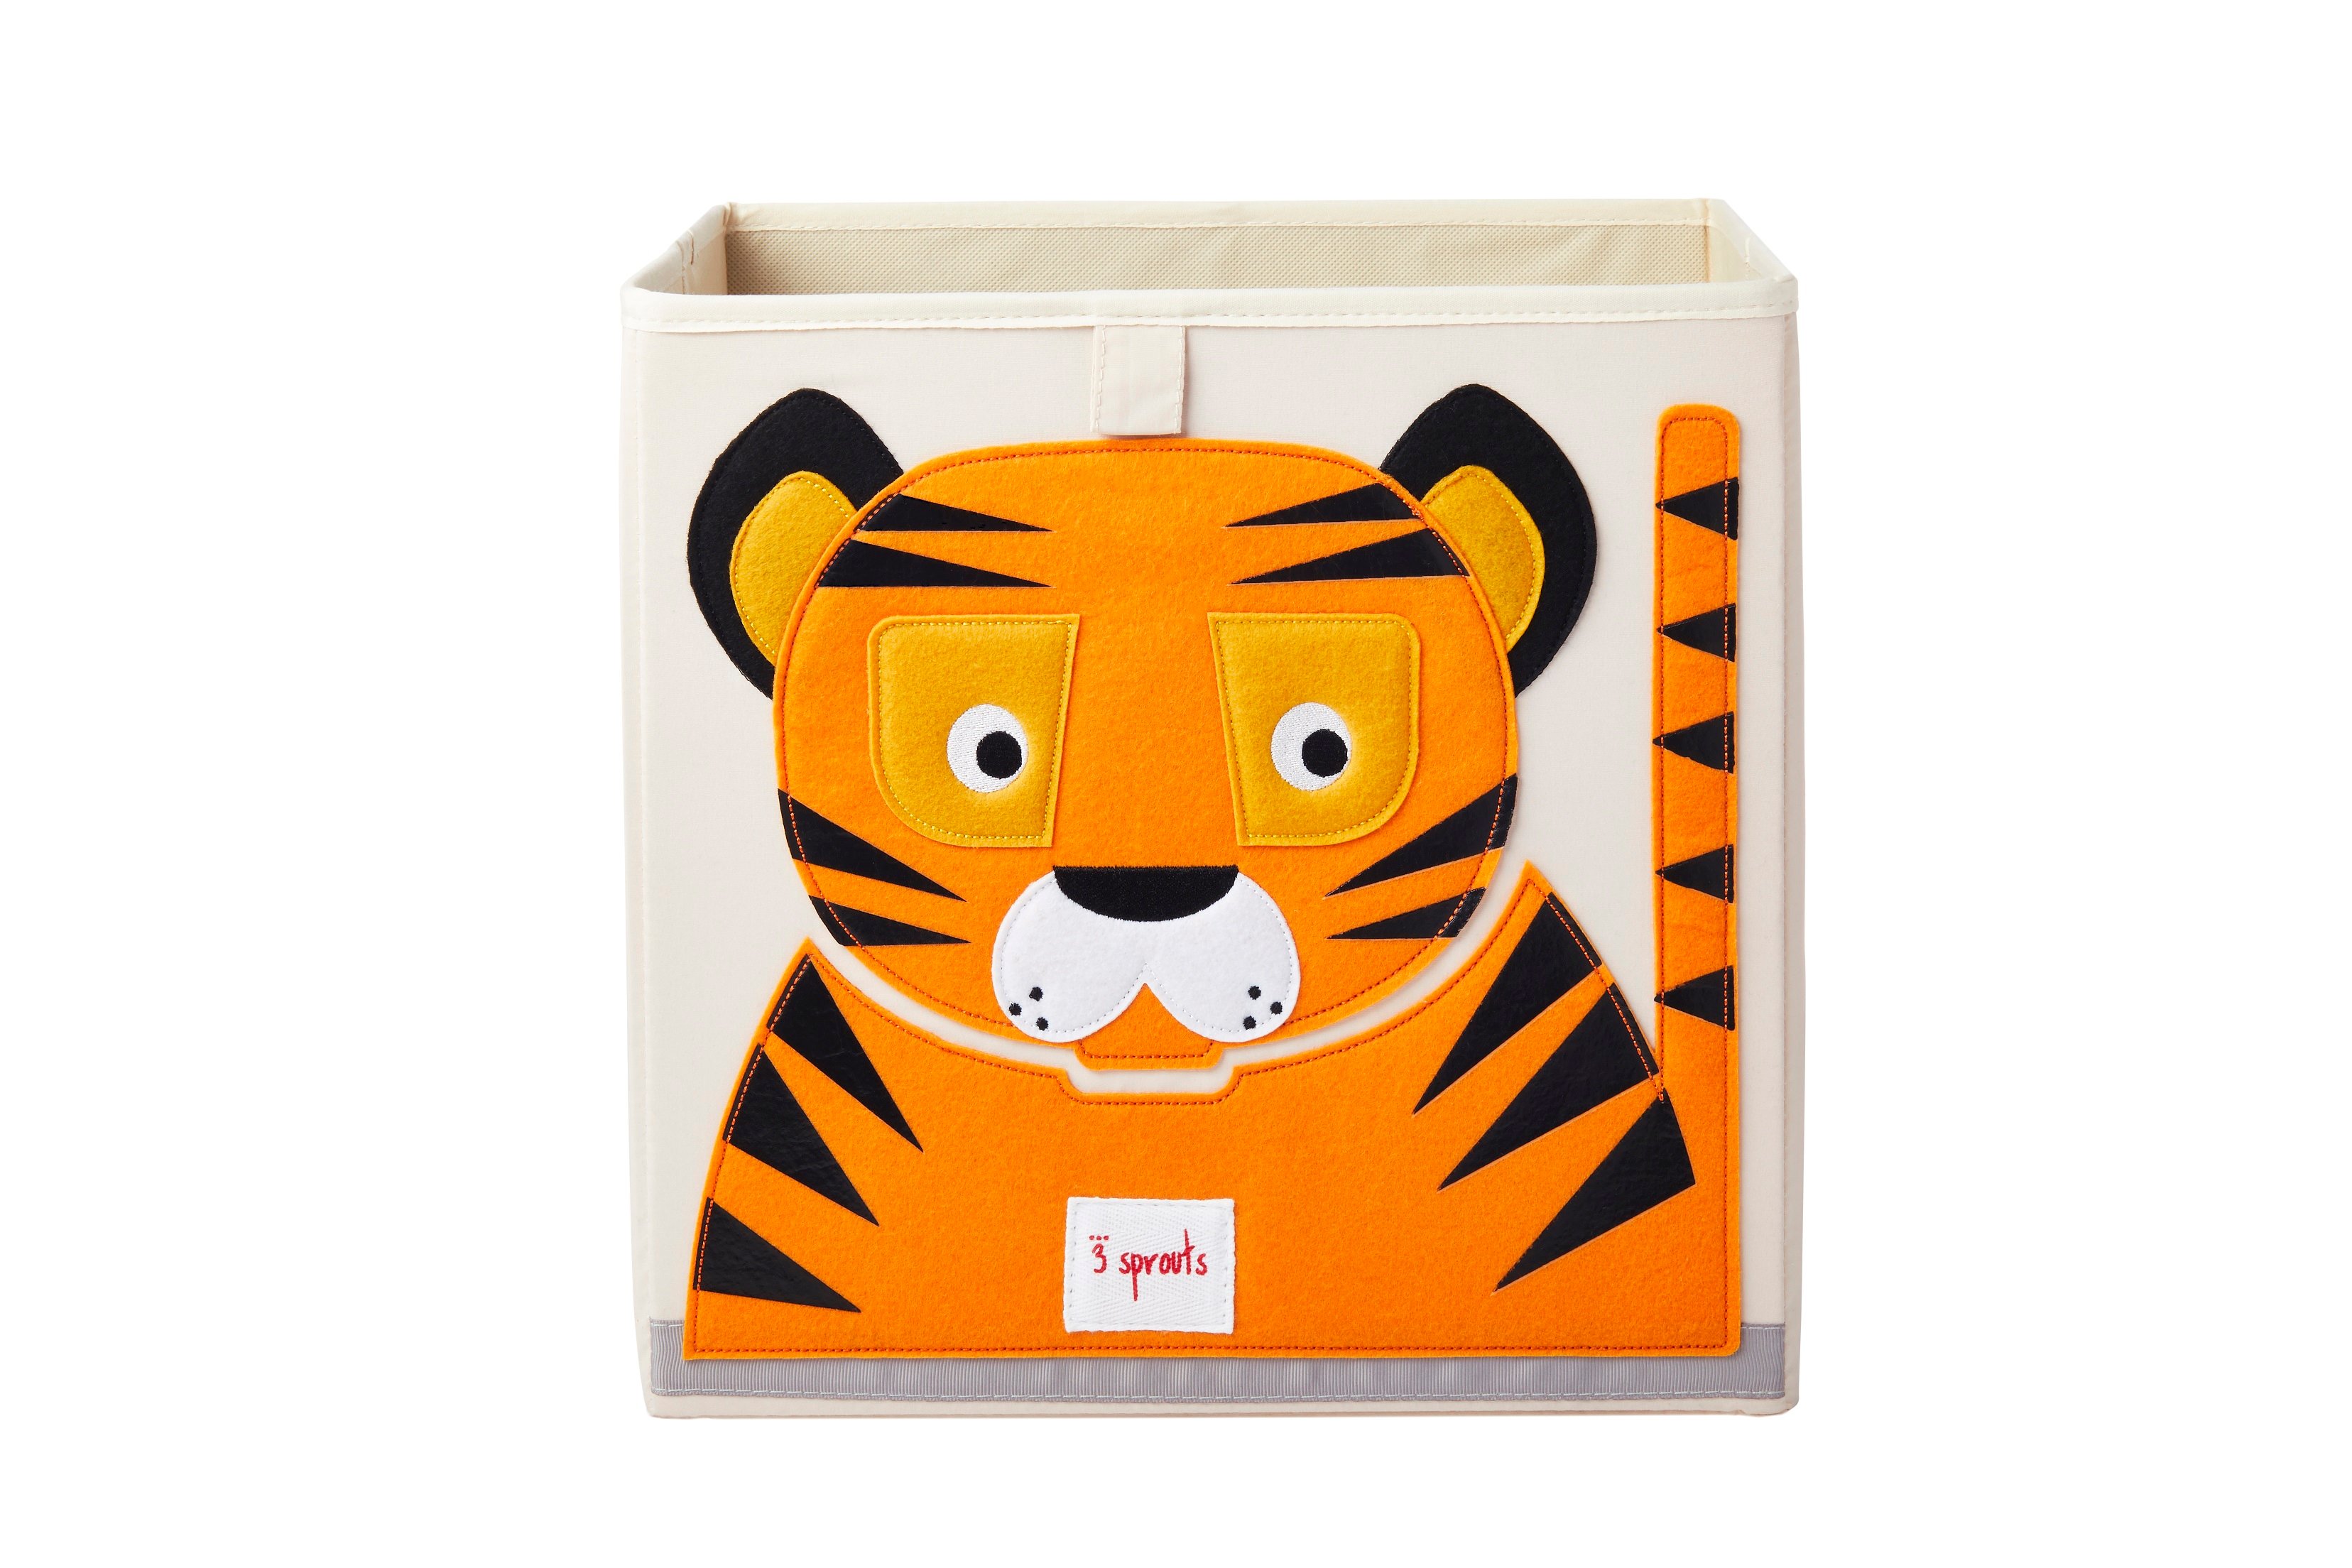 3 Sprouts - Storage Box - Orange Tiger